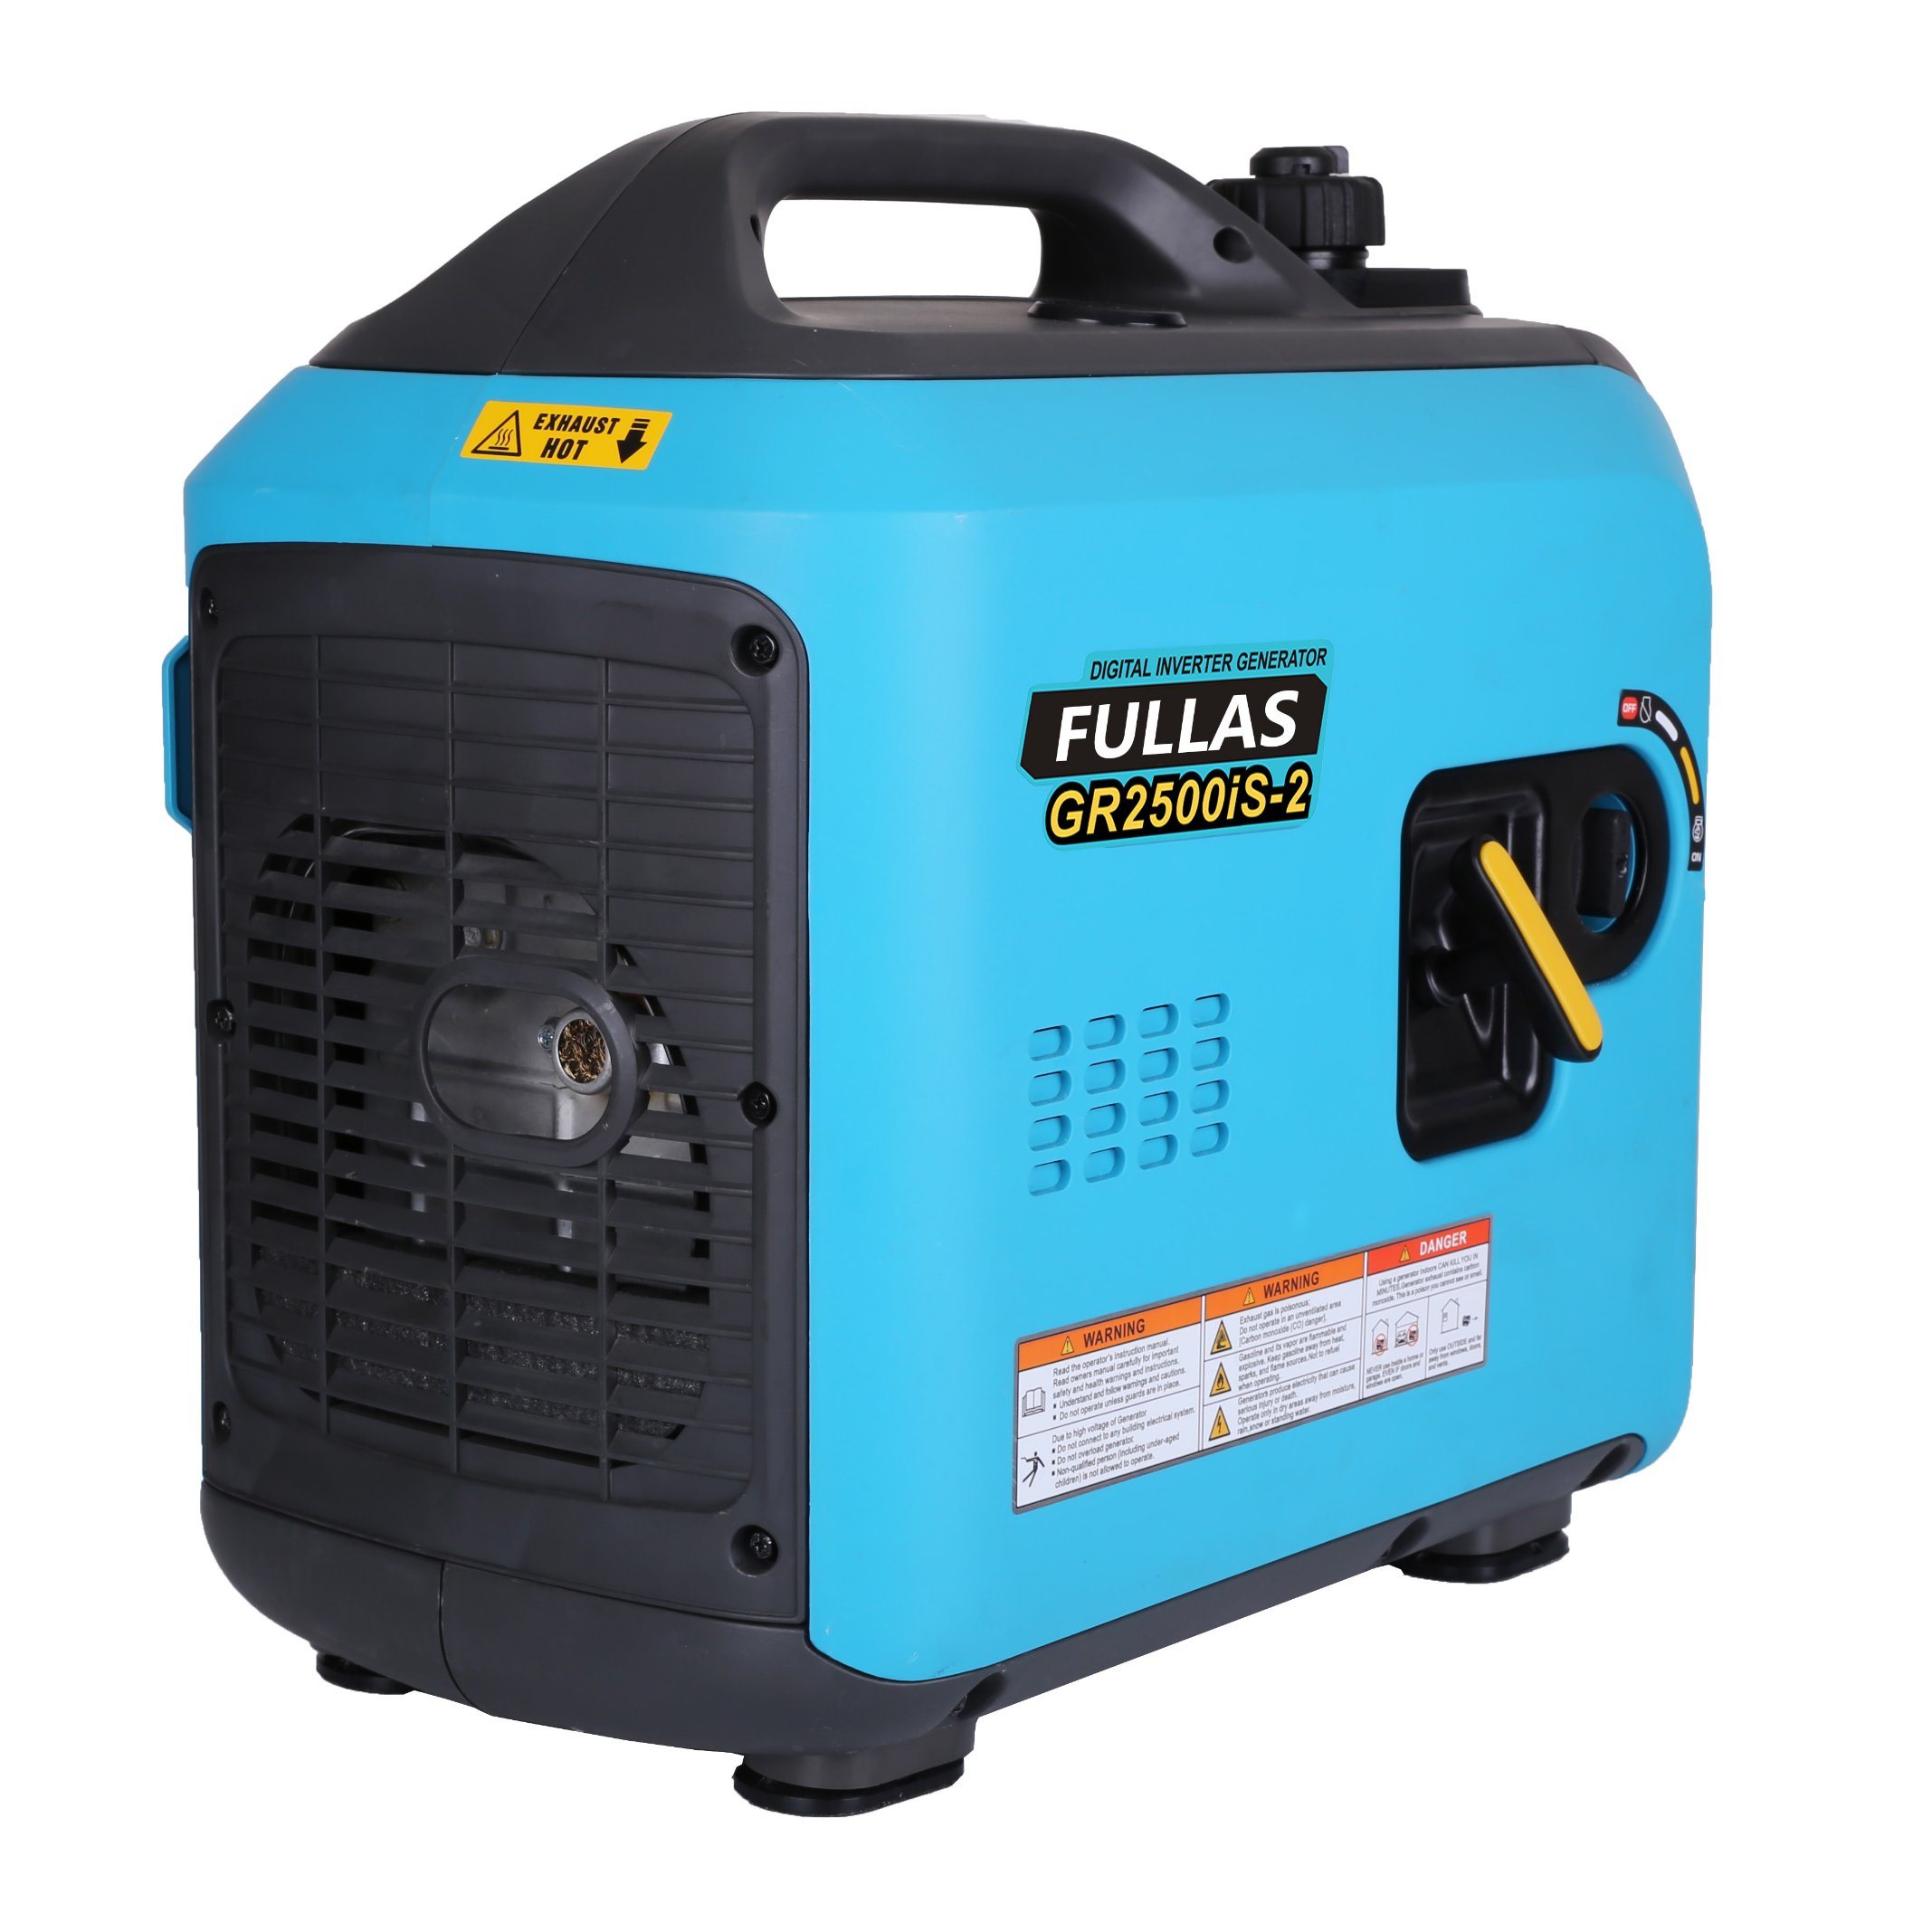 Fullas FP2300iS-2 1.8KW Inverter Generator Powered by 98CC Petrol Engine